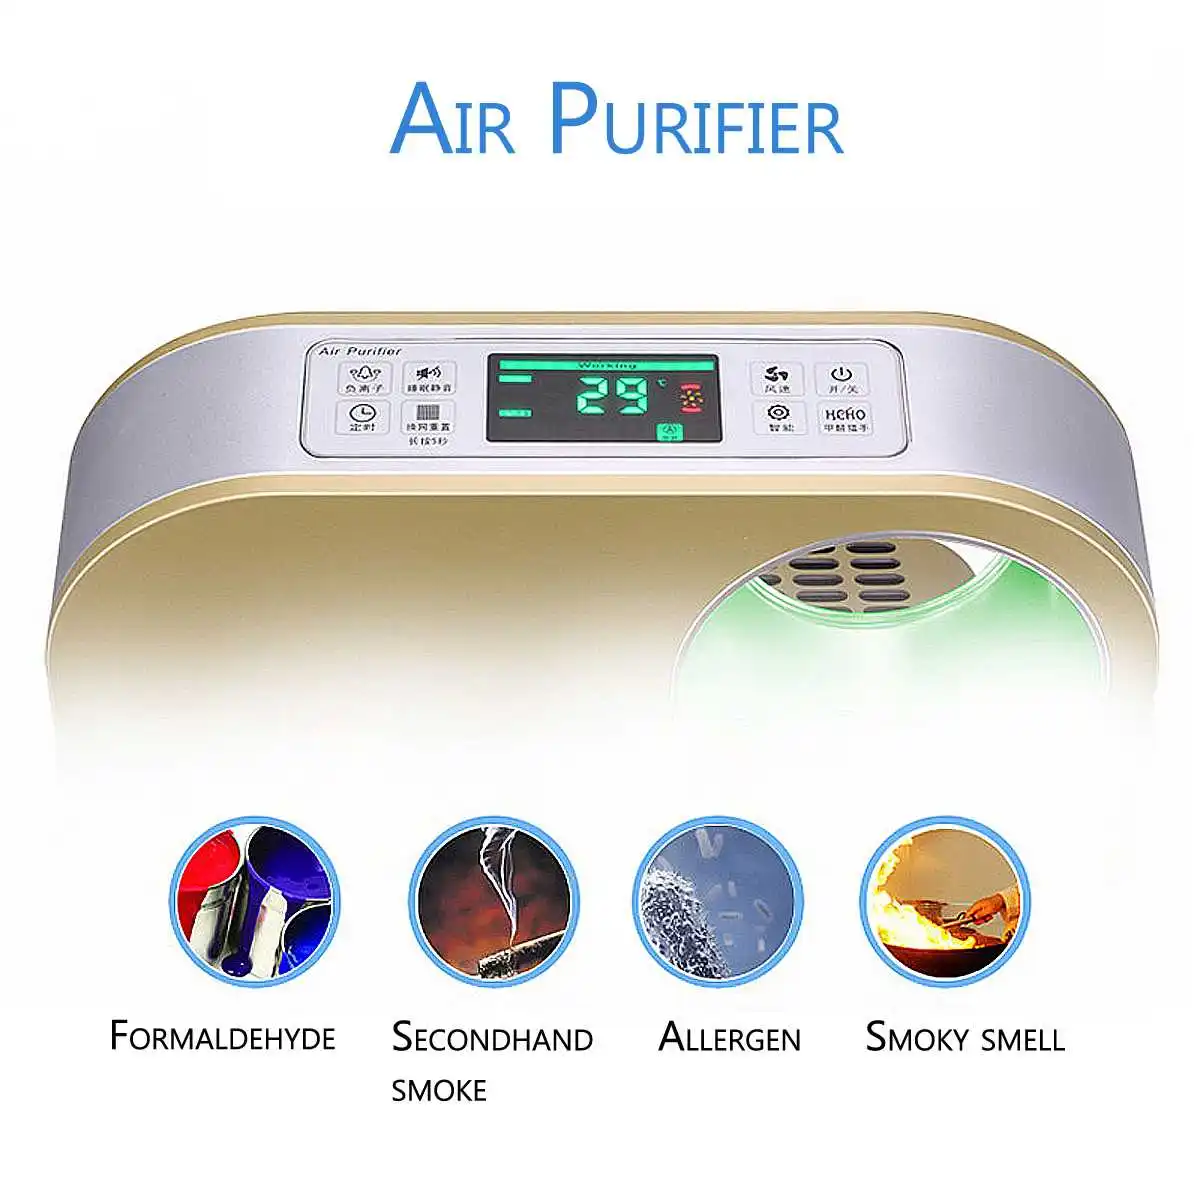 Air Purifier HEPA Filter Mi Air Cleaner